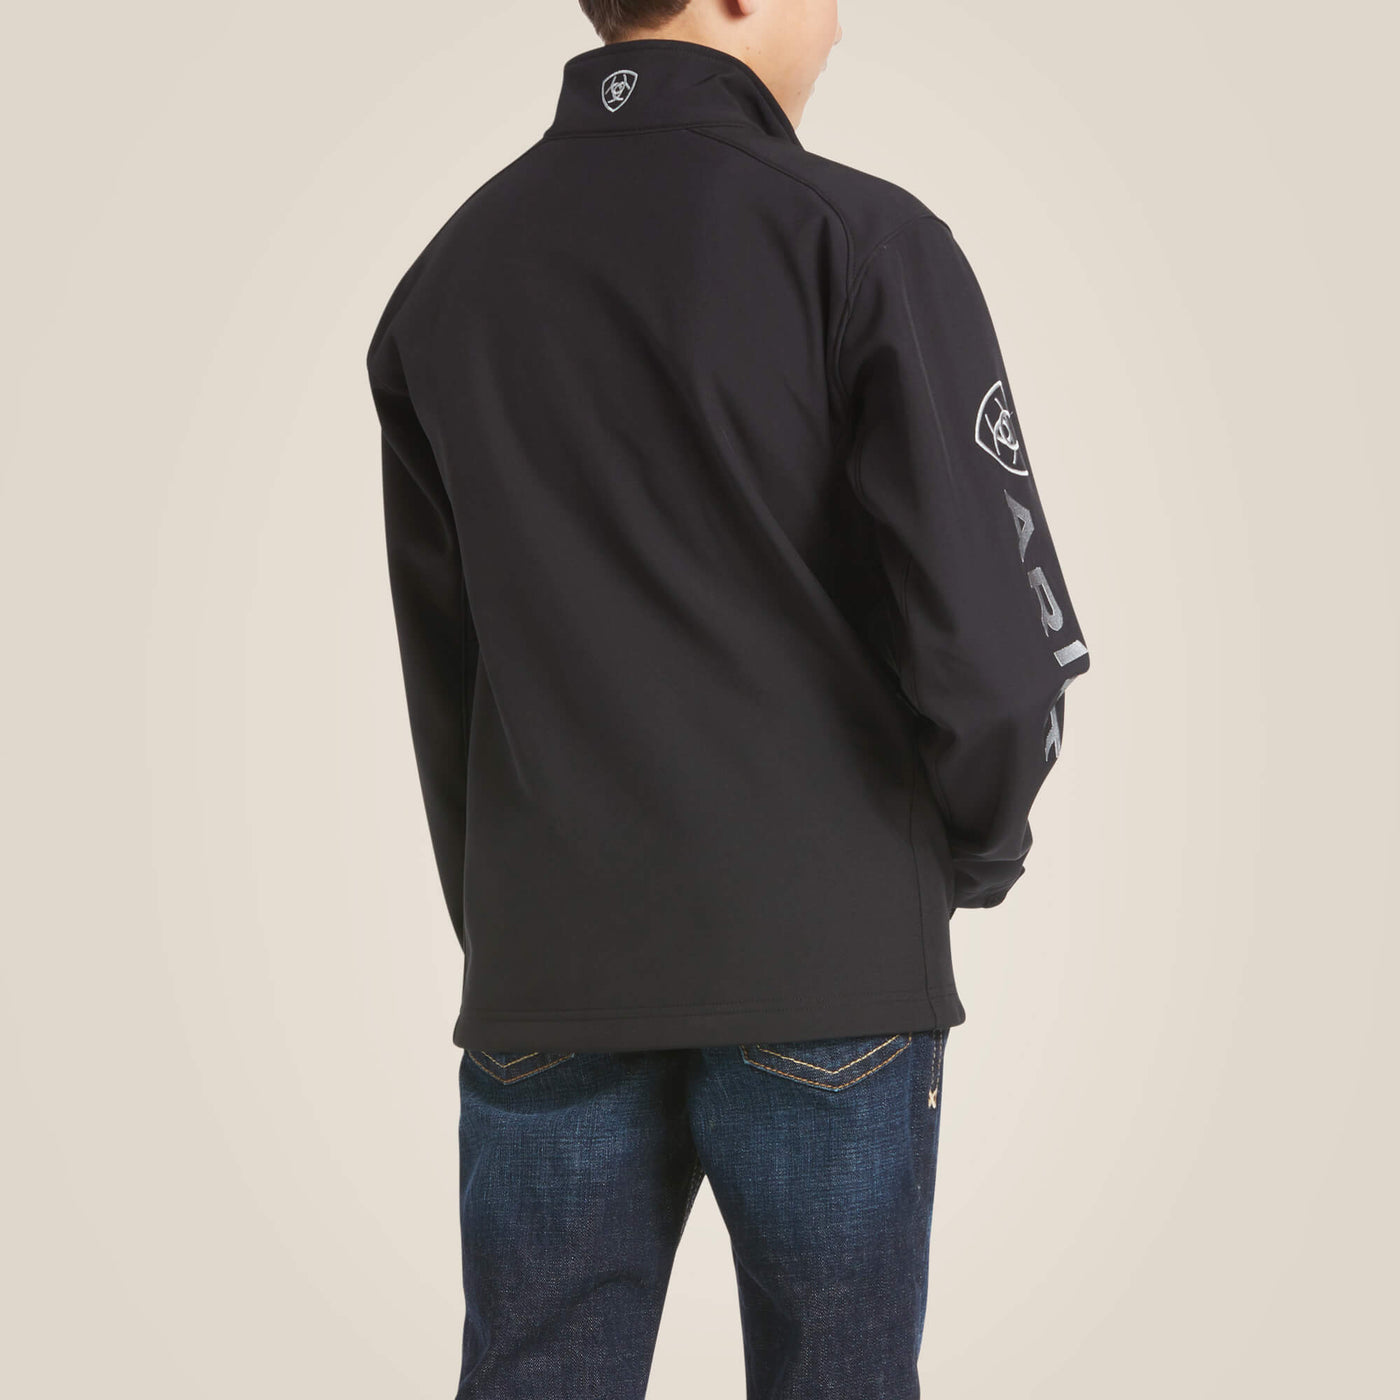 Ariat Kid's Black and Silver Logo 2.0 Softshell Jacket